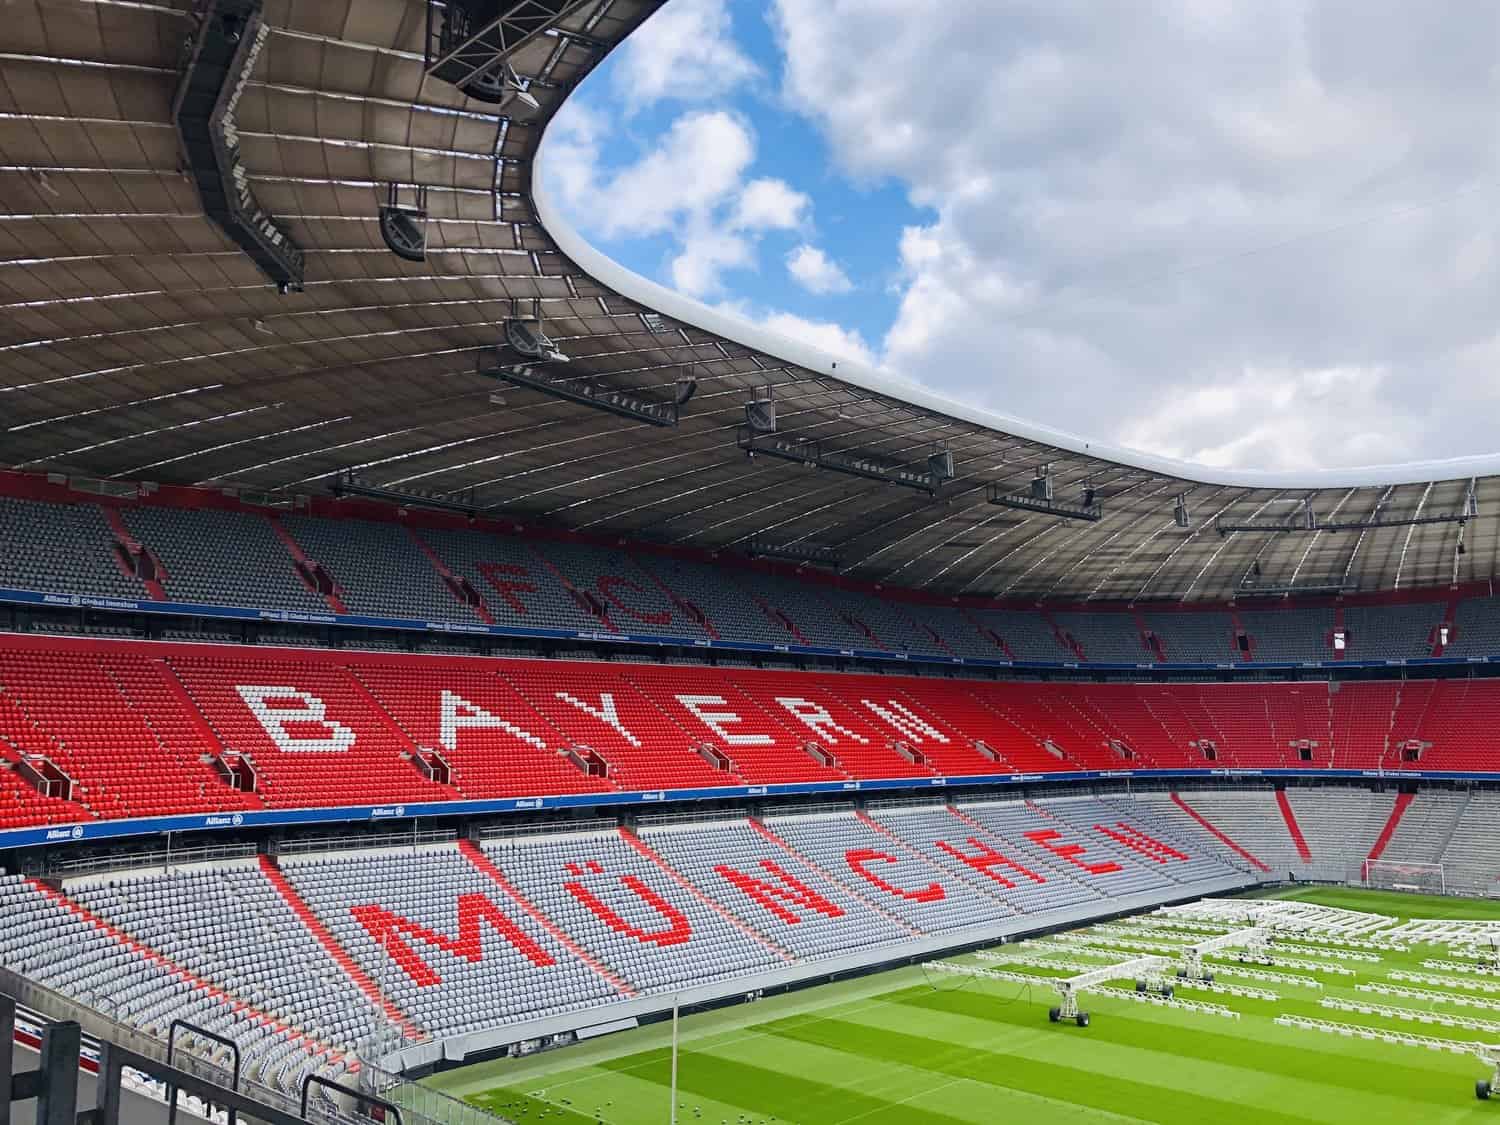 Soccer stadium with Bayern Munchen written on the seats